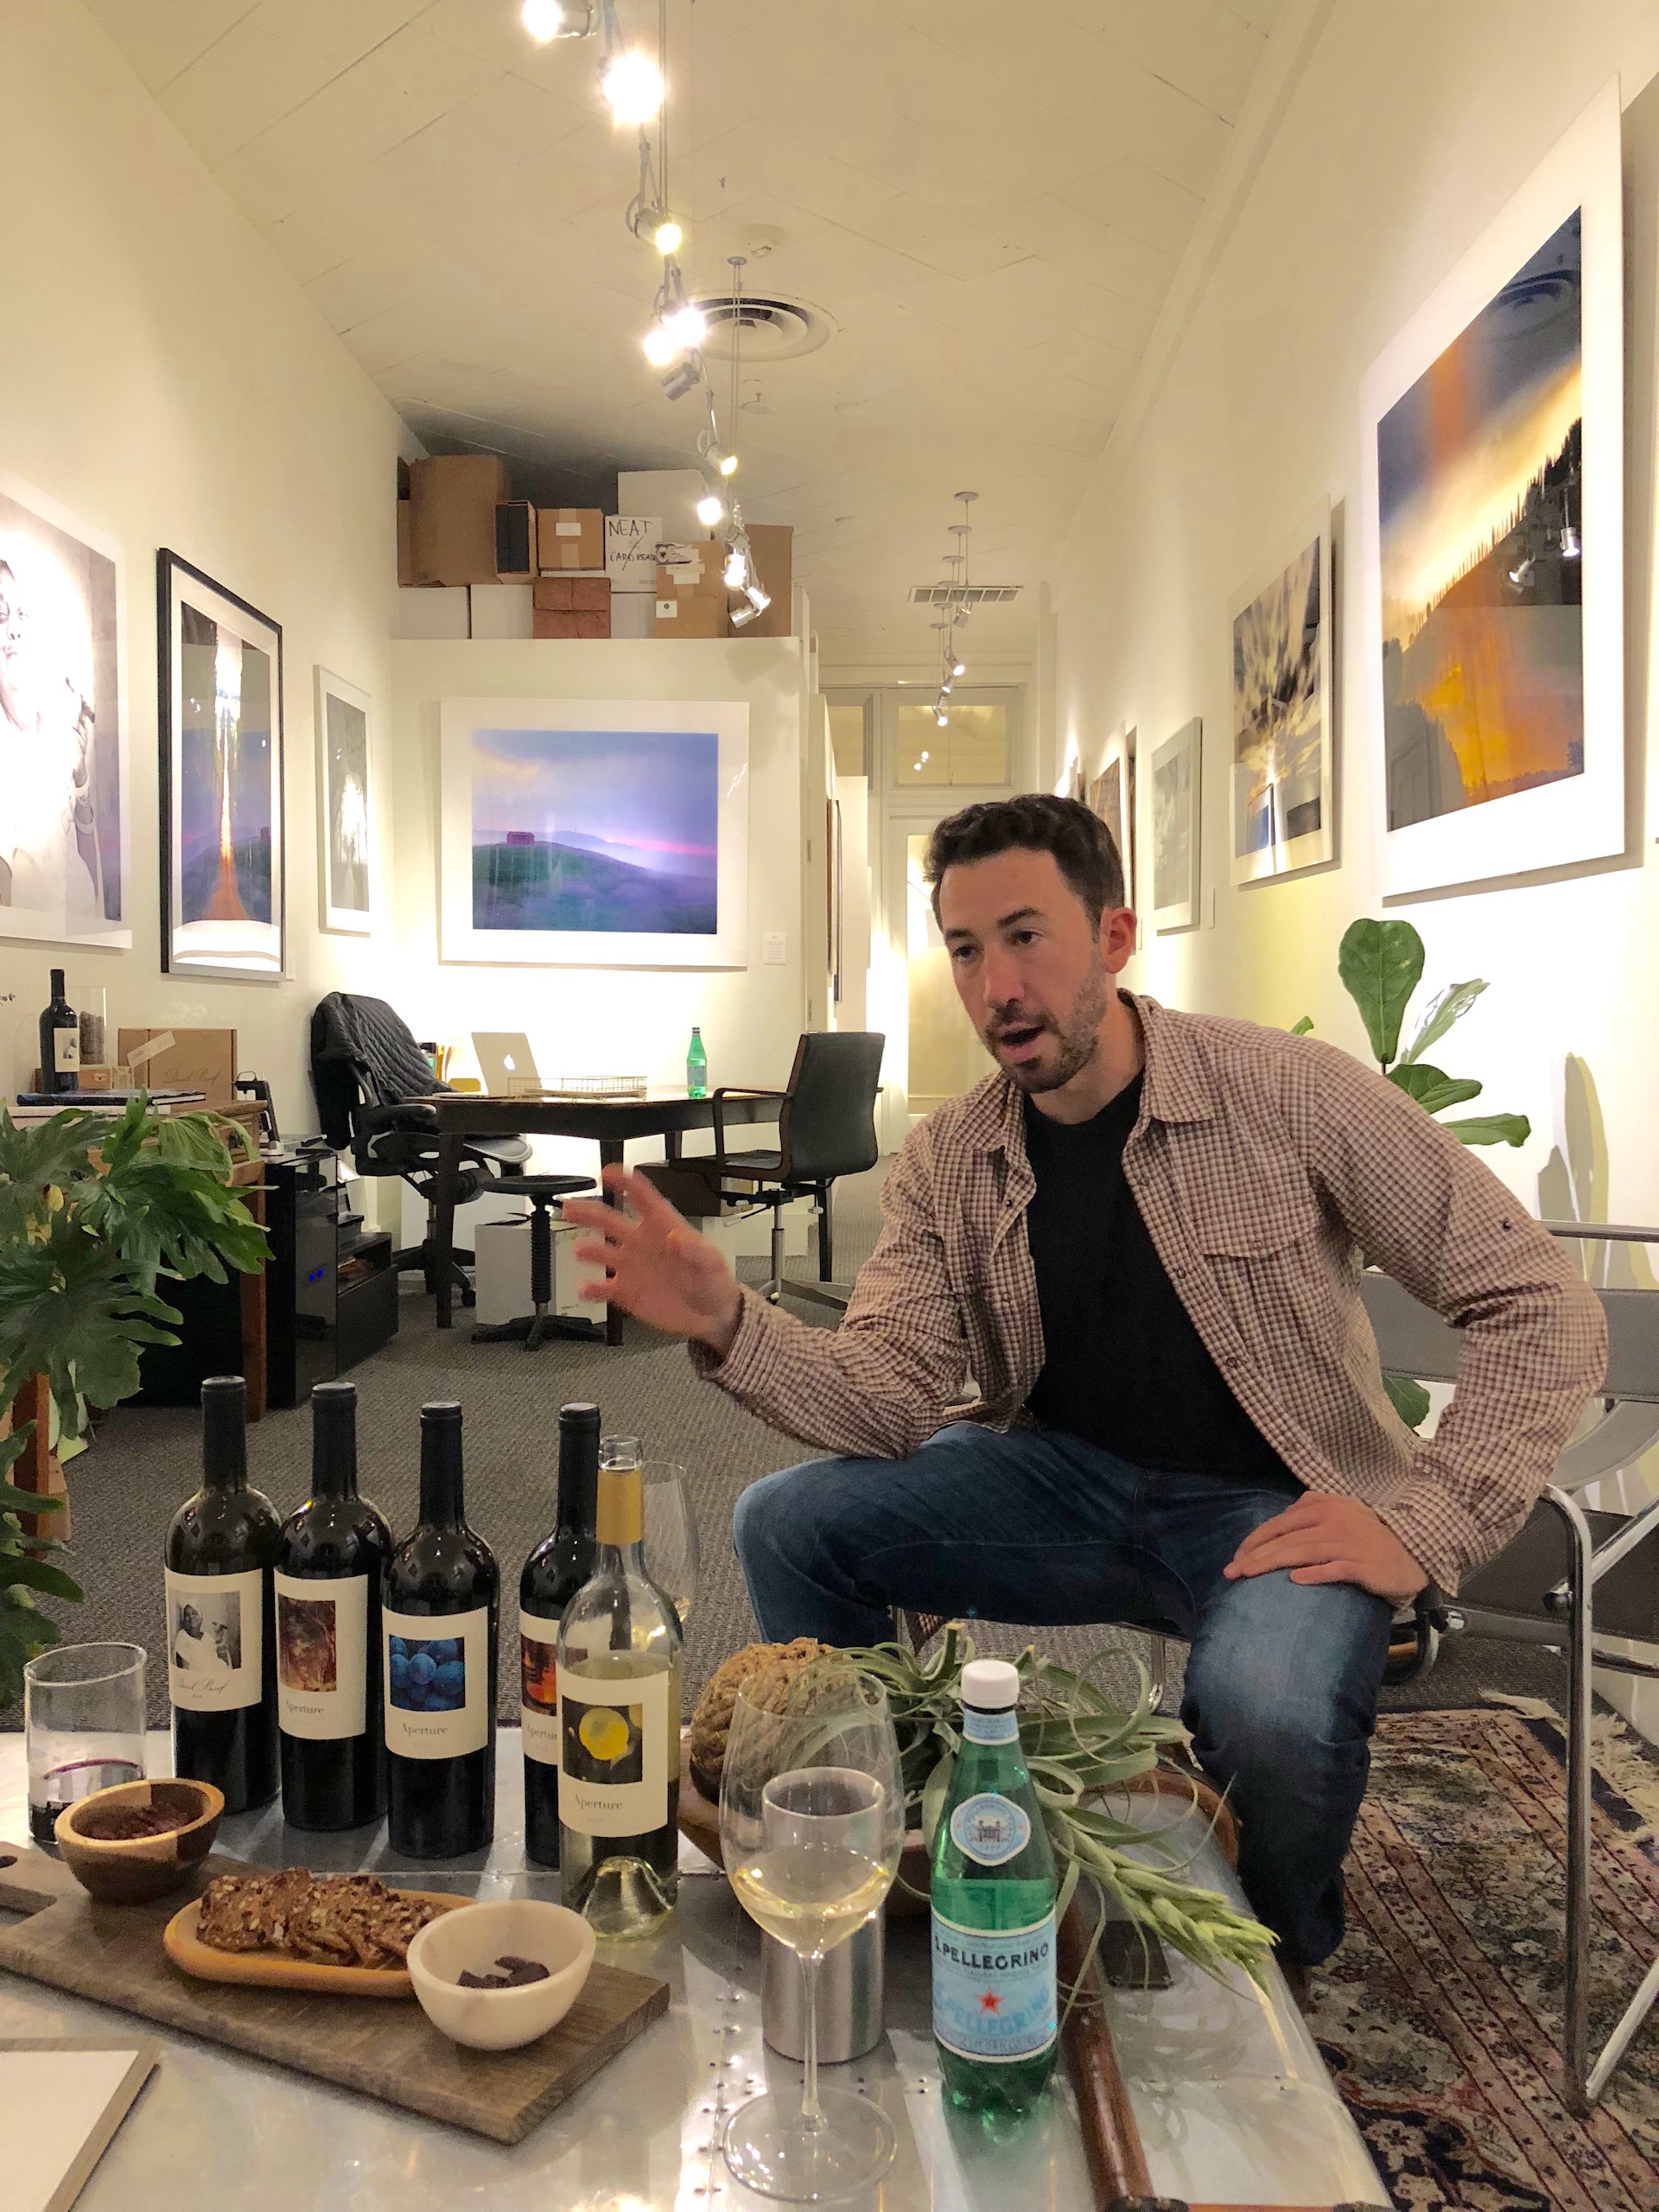 Aperture/Devil Proof’s winemaker Jesse Katz discusses his globetrotting wine career